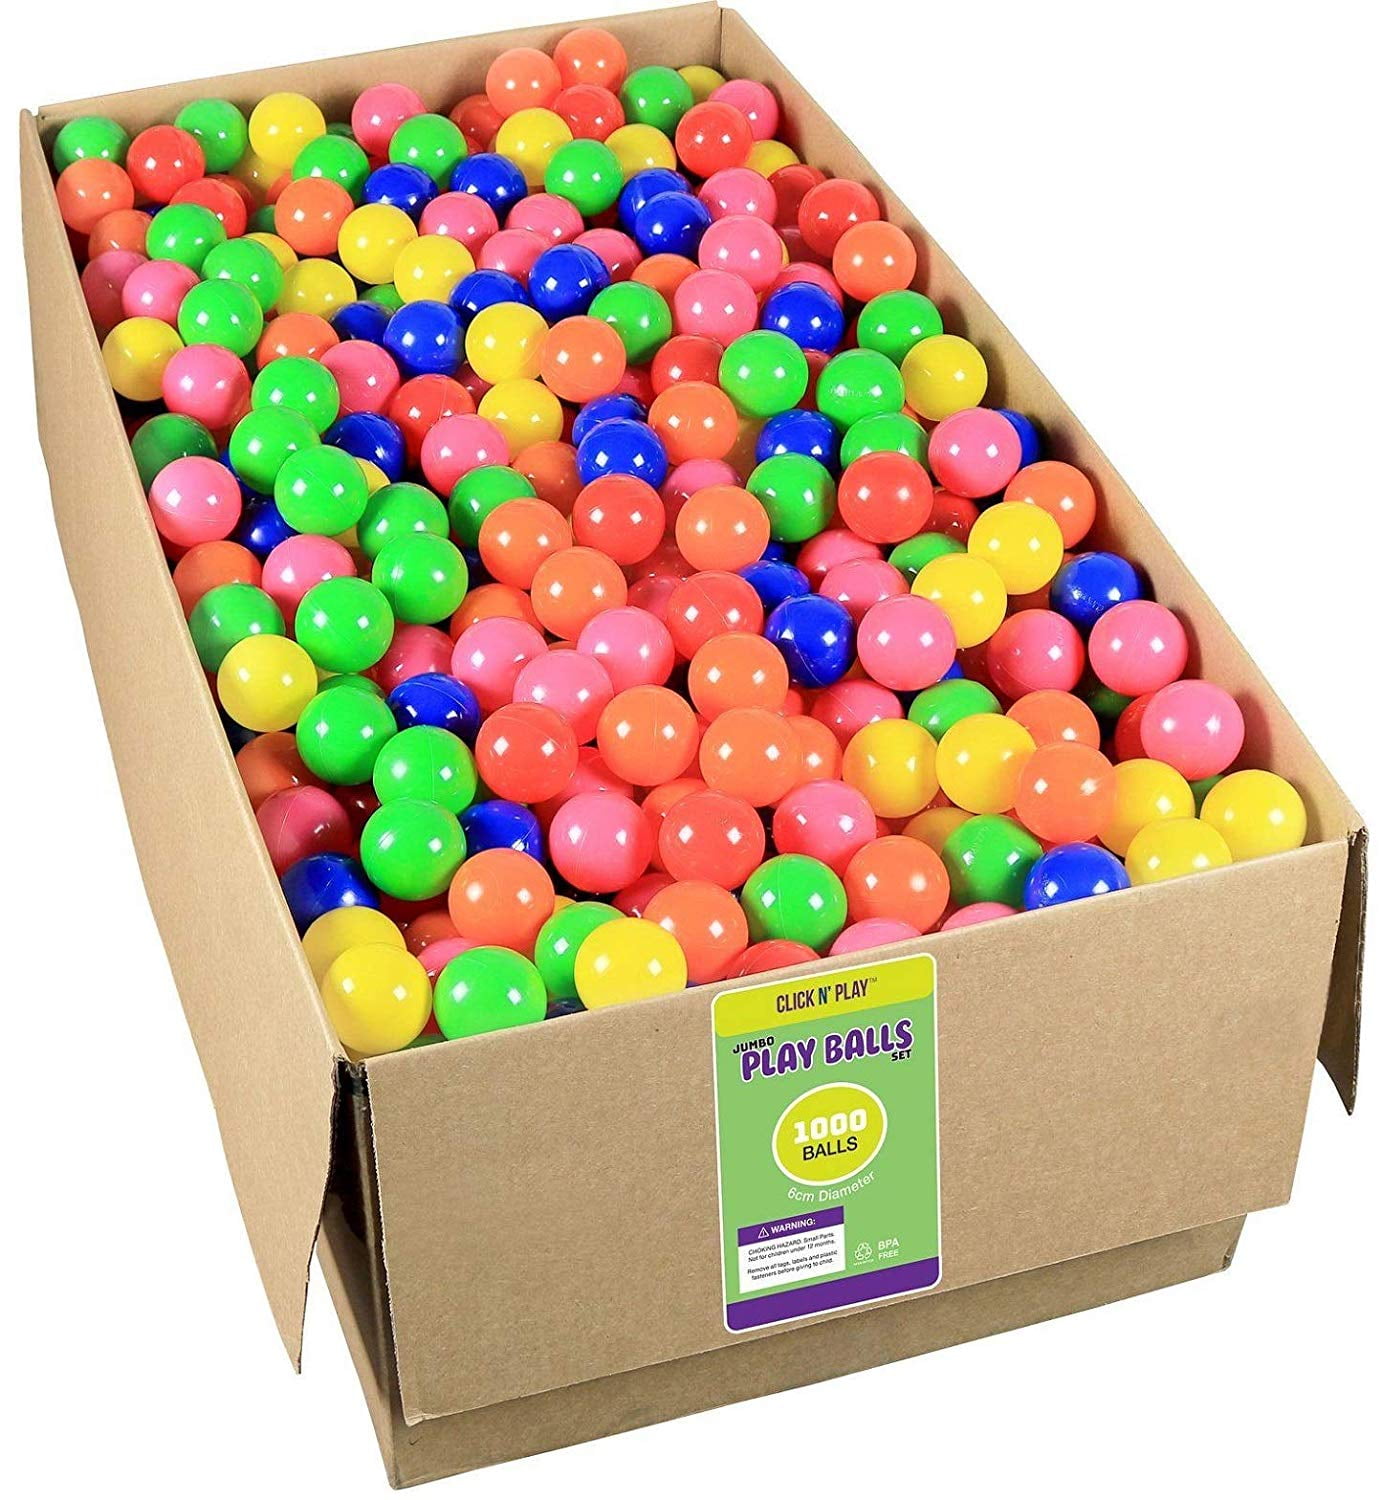 Soft Foam Ball Pit for Baby Toddler 90 x 30 cm Plus 200 Ball Pit / 200 Balls, Grey / Blue Balls 400 PVC Play Balls